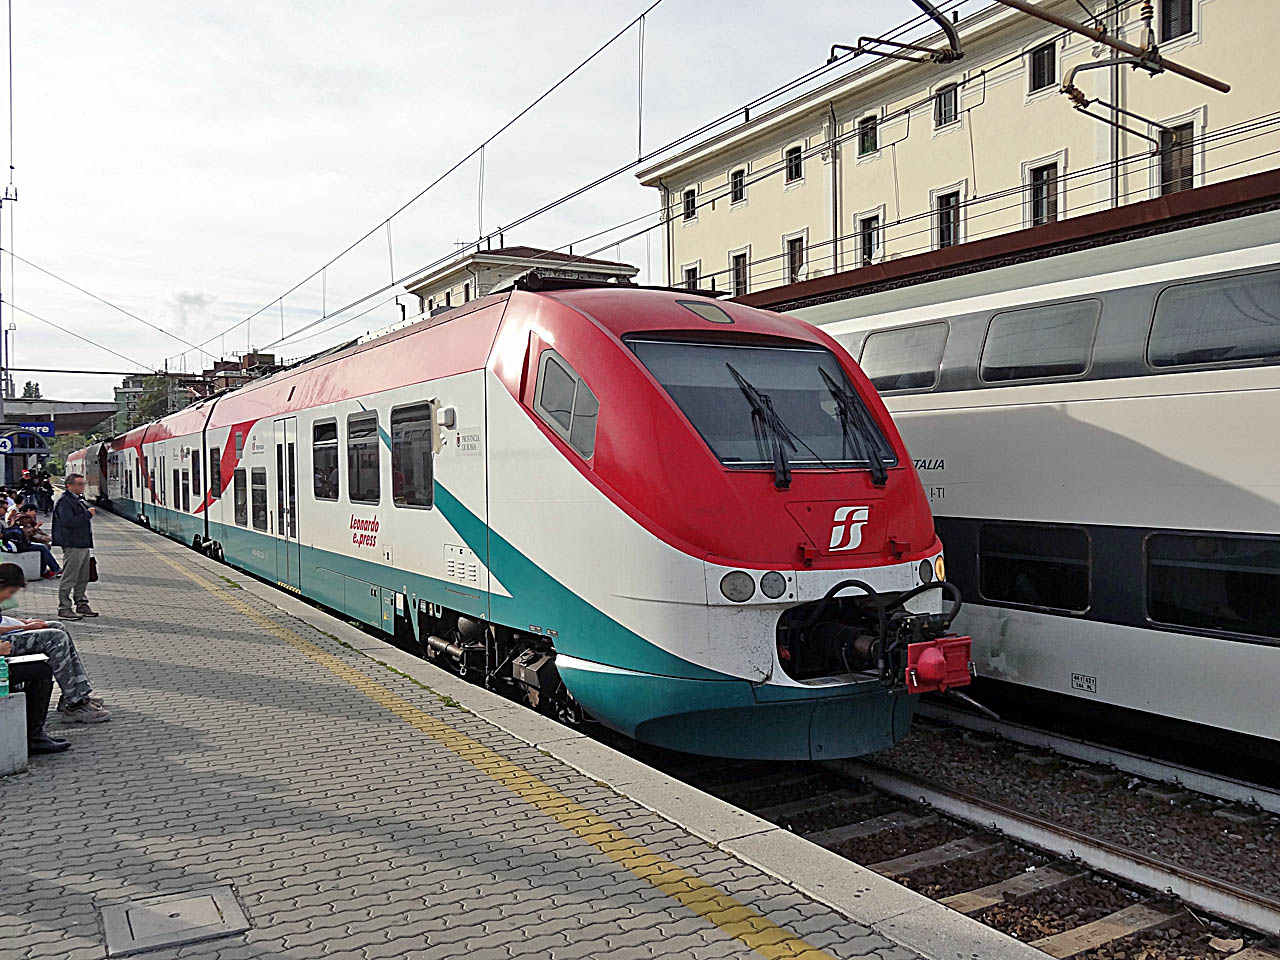 Le train Leonardo express provient de l'aéroport de Fiumicino et se dirige vers Termini. Ici sans arrêt à Roma-Trastevere.